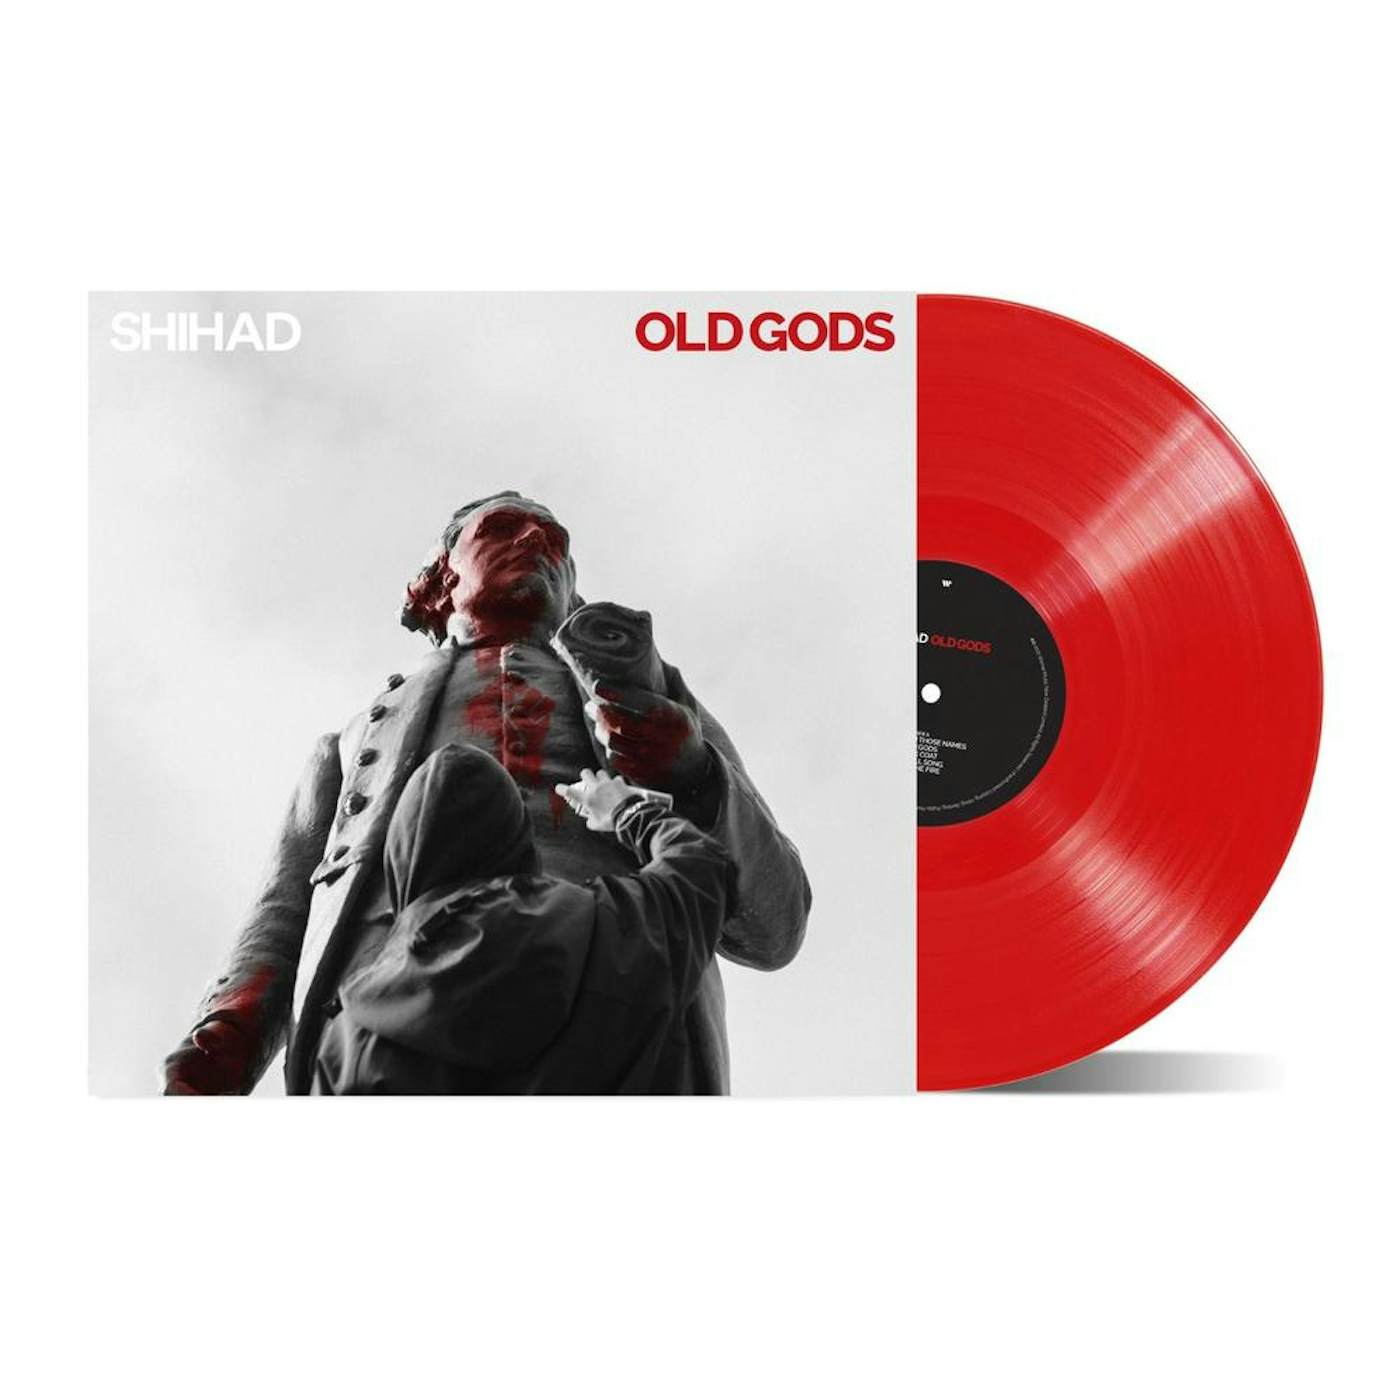 Shihad Old Gods LP (Red Vinyl)